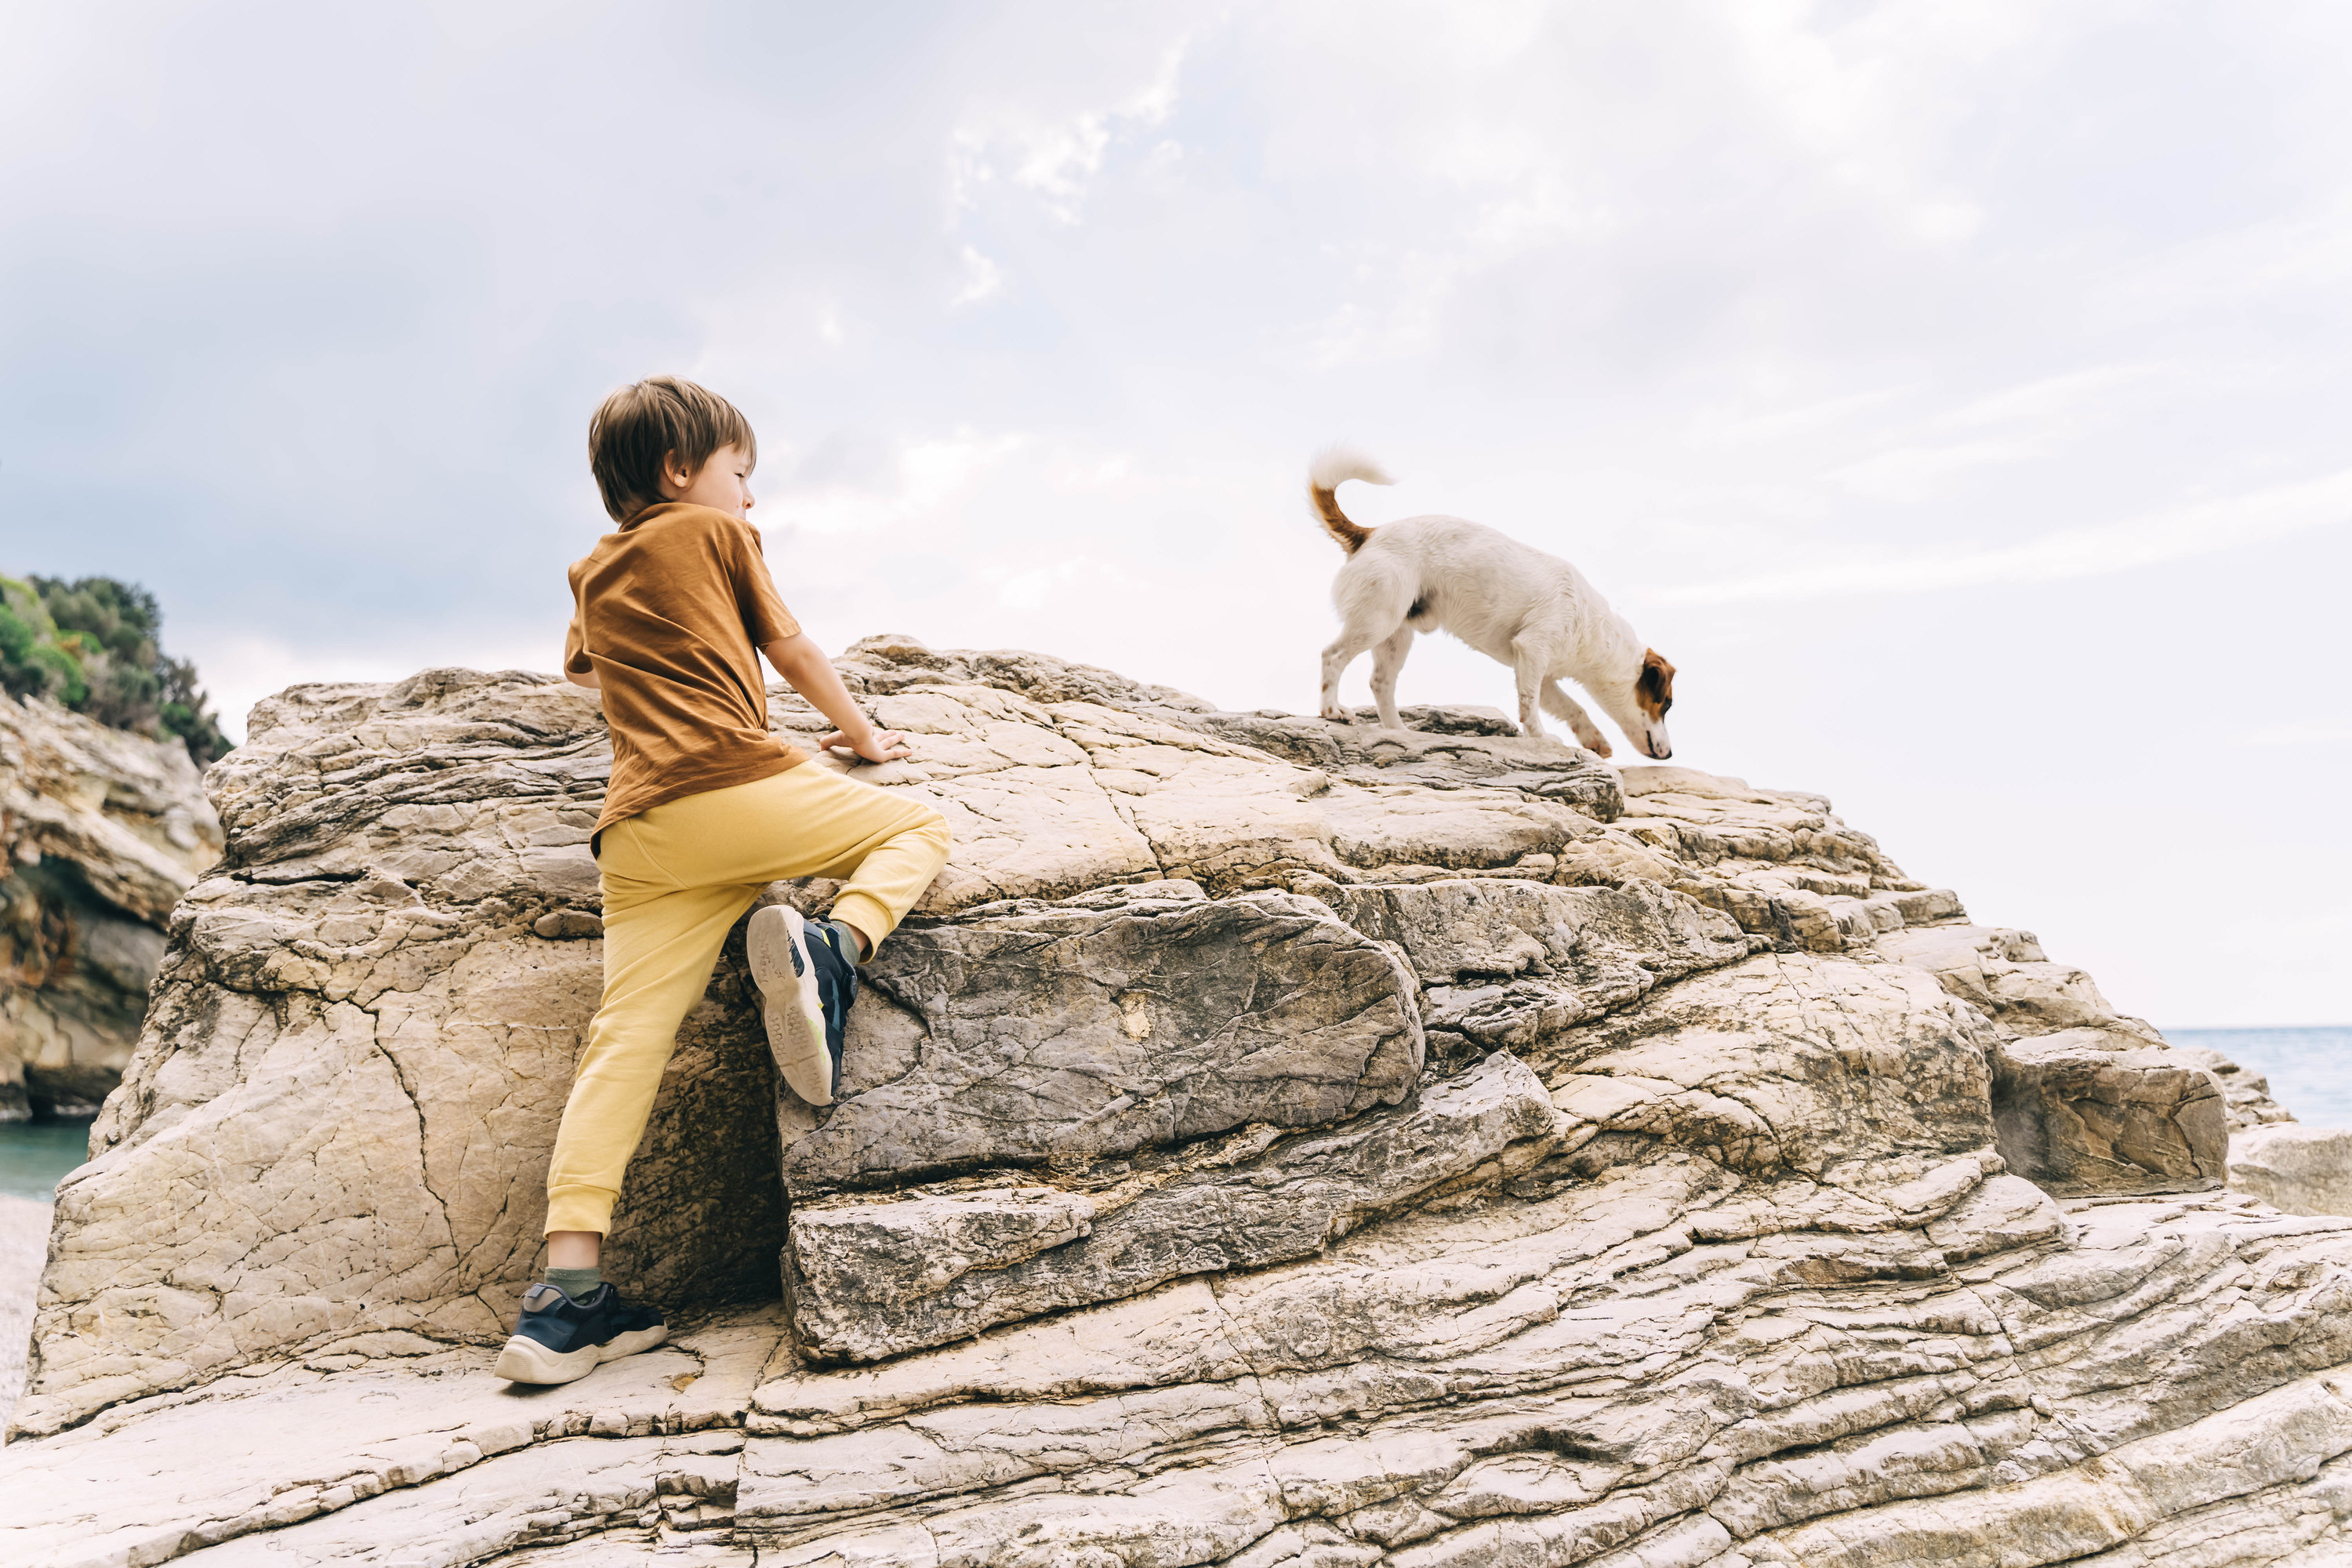 a kid climbing a rock with a dog